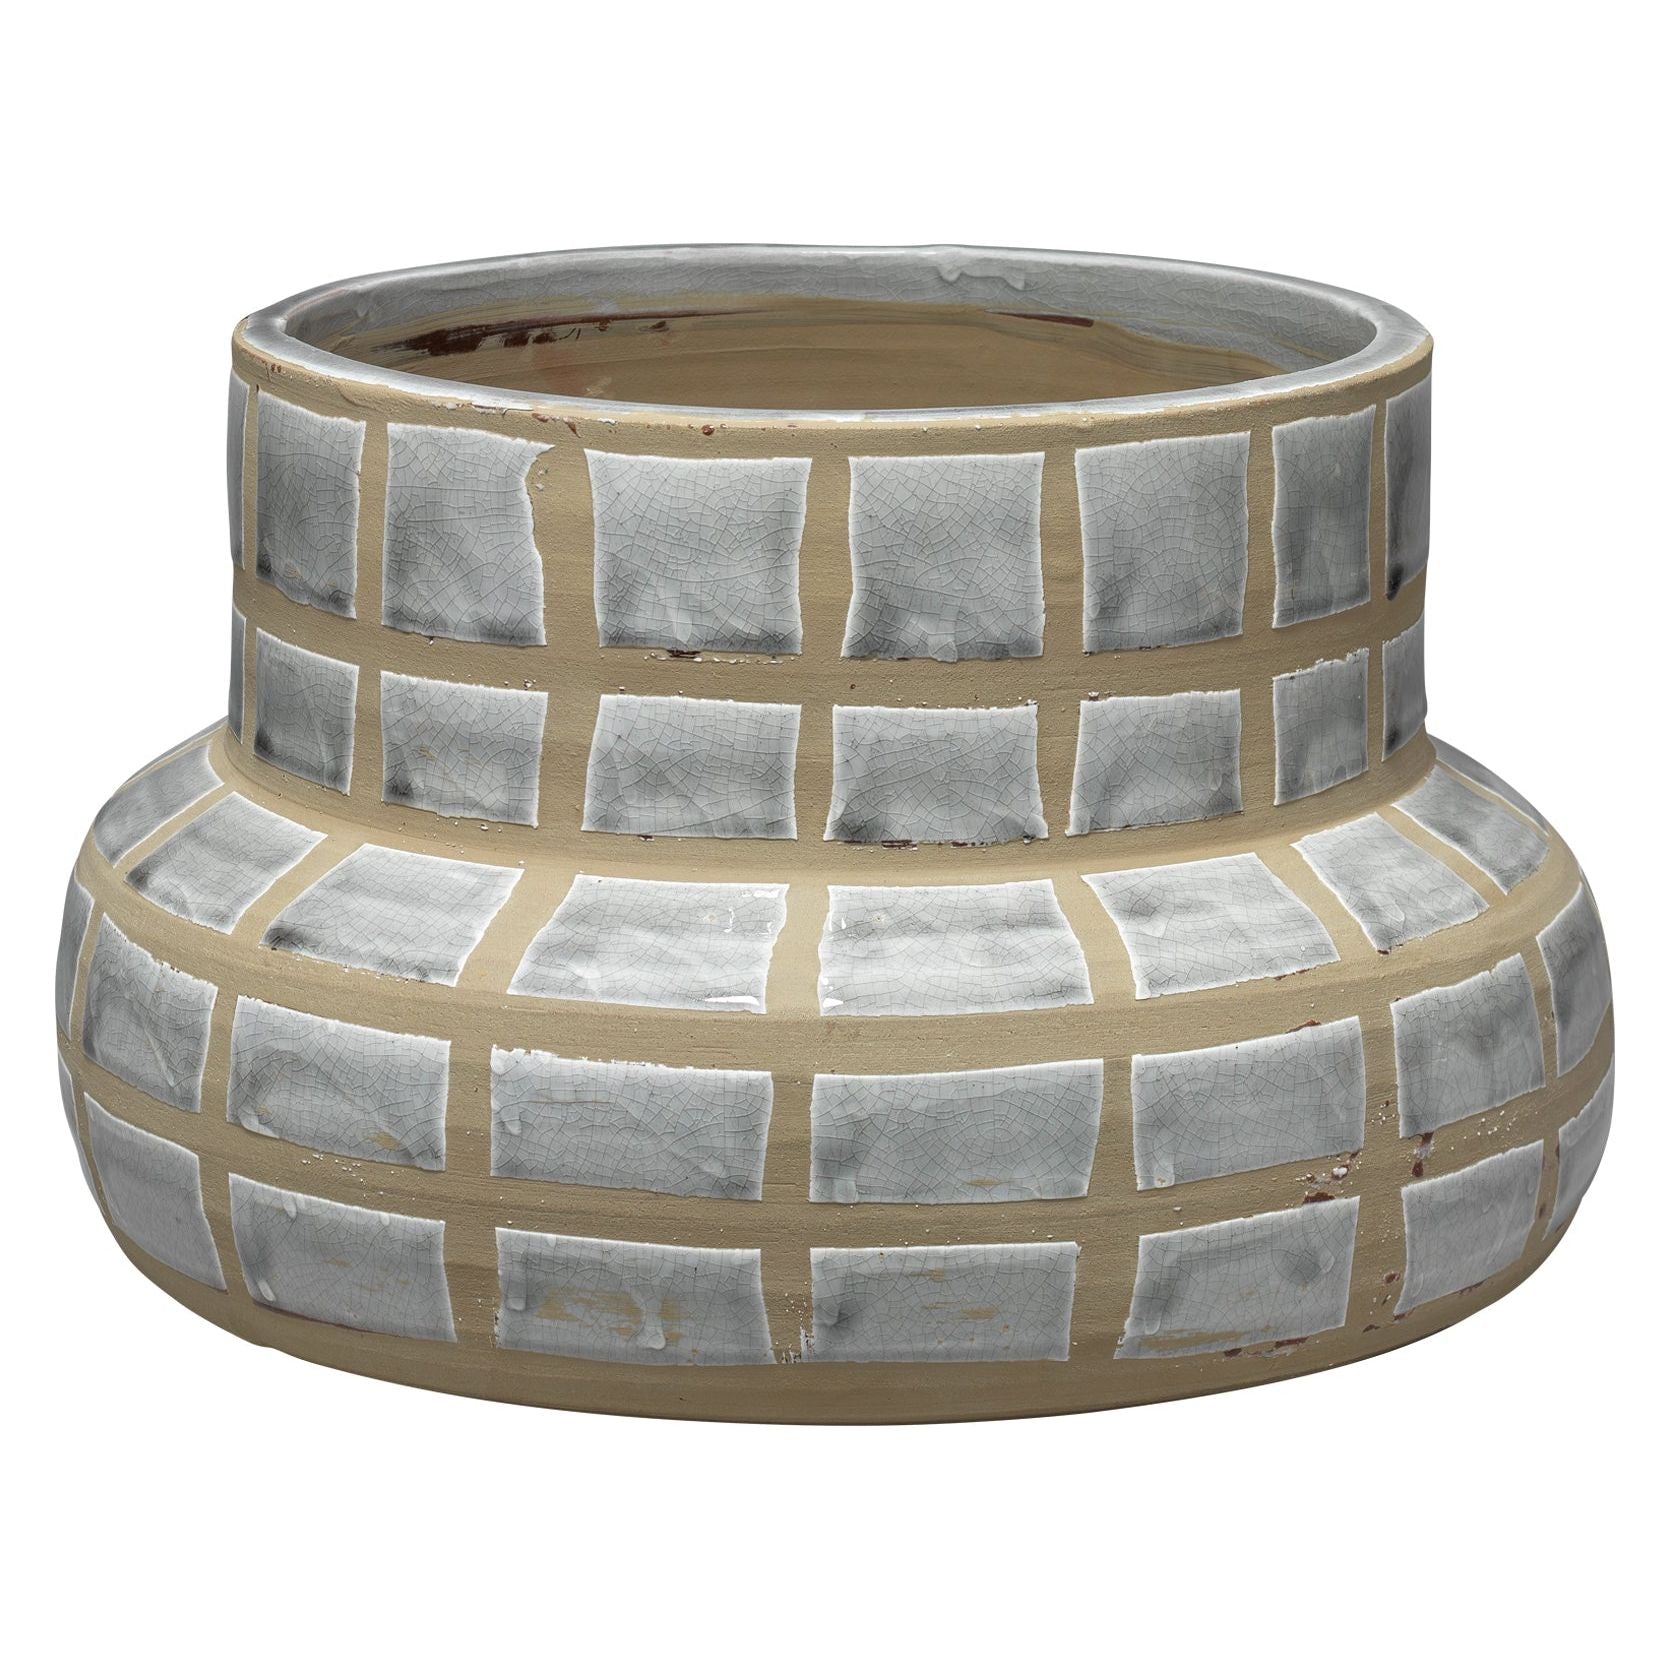 Jamie Young Company - 7GRID-VAGR - Grid Ceramic Vase - Grid - Grey